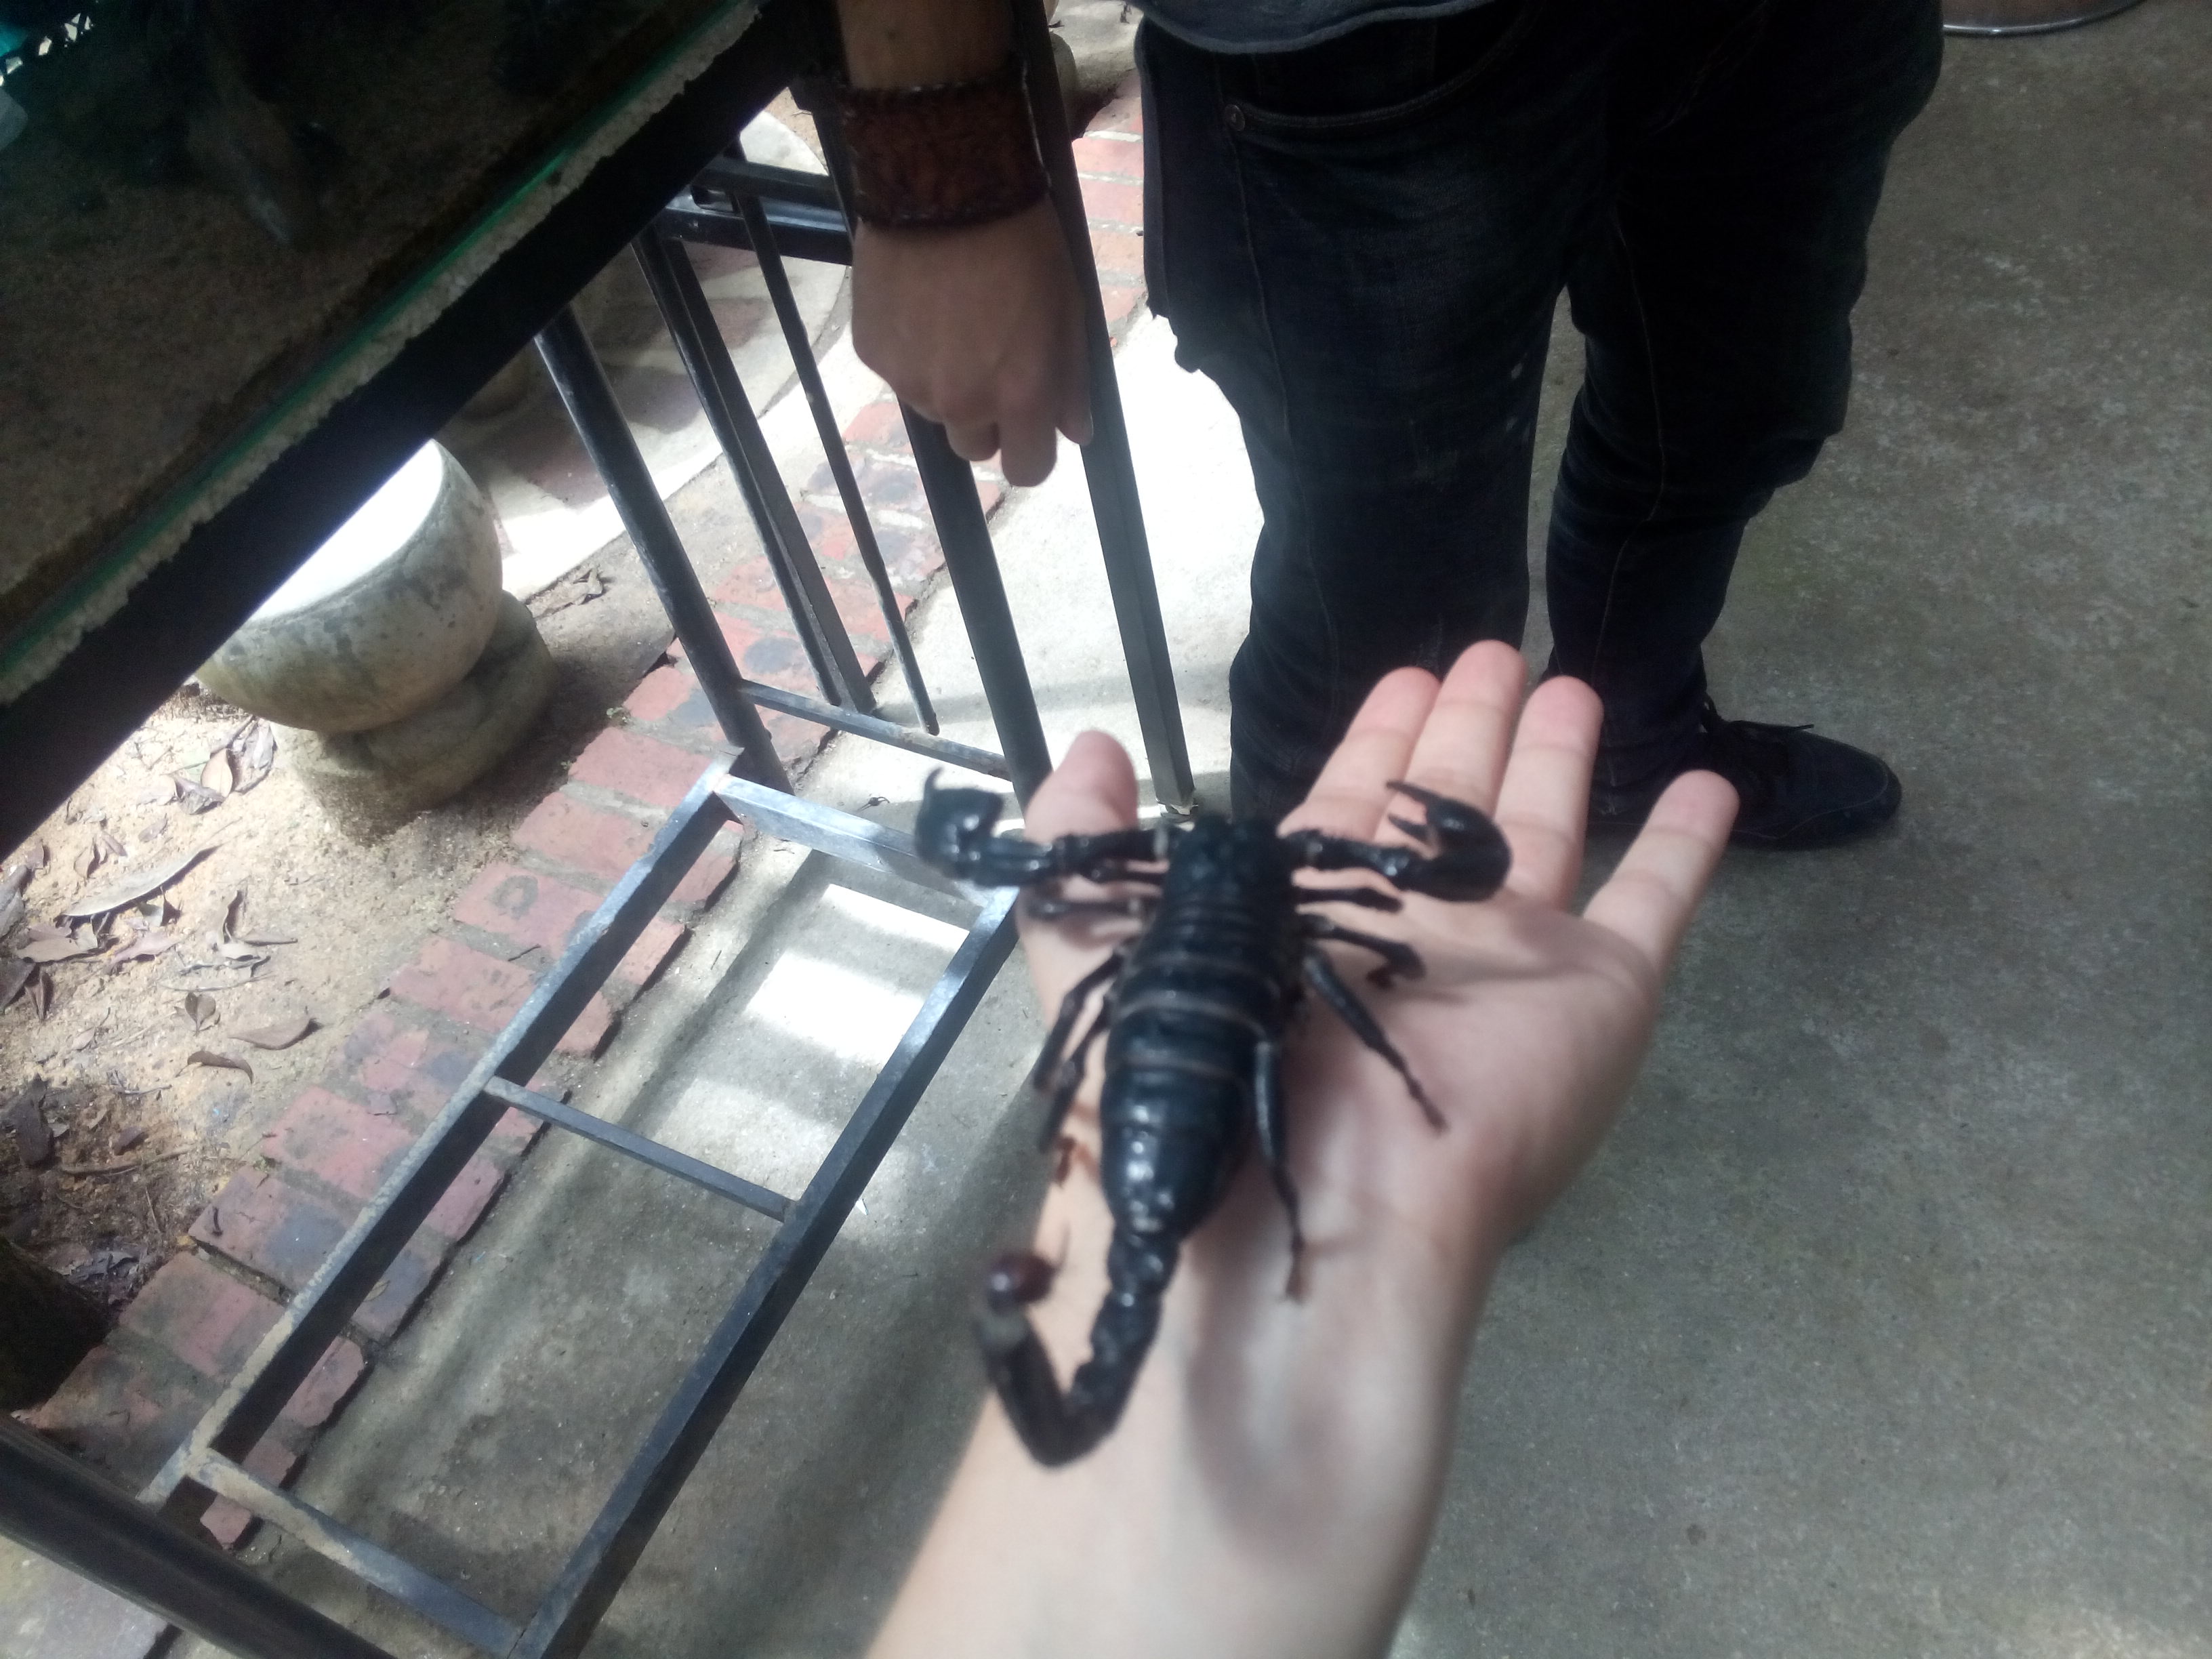 rhiaro's hand with a scorpion on it